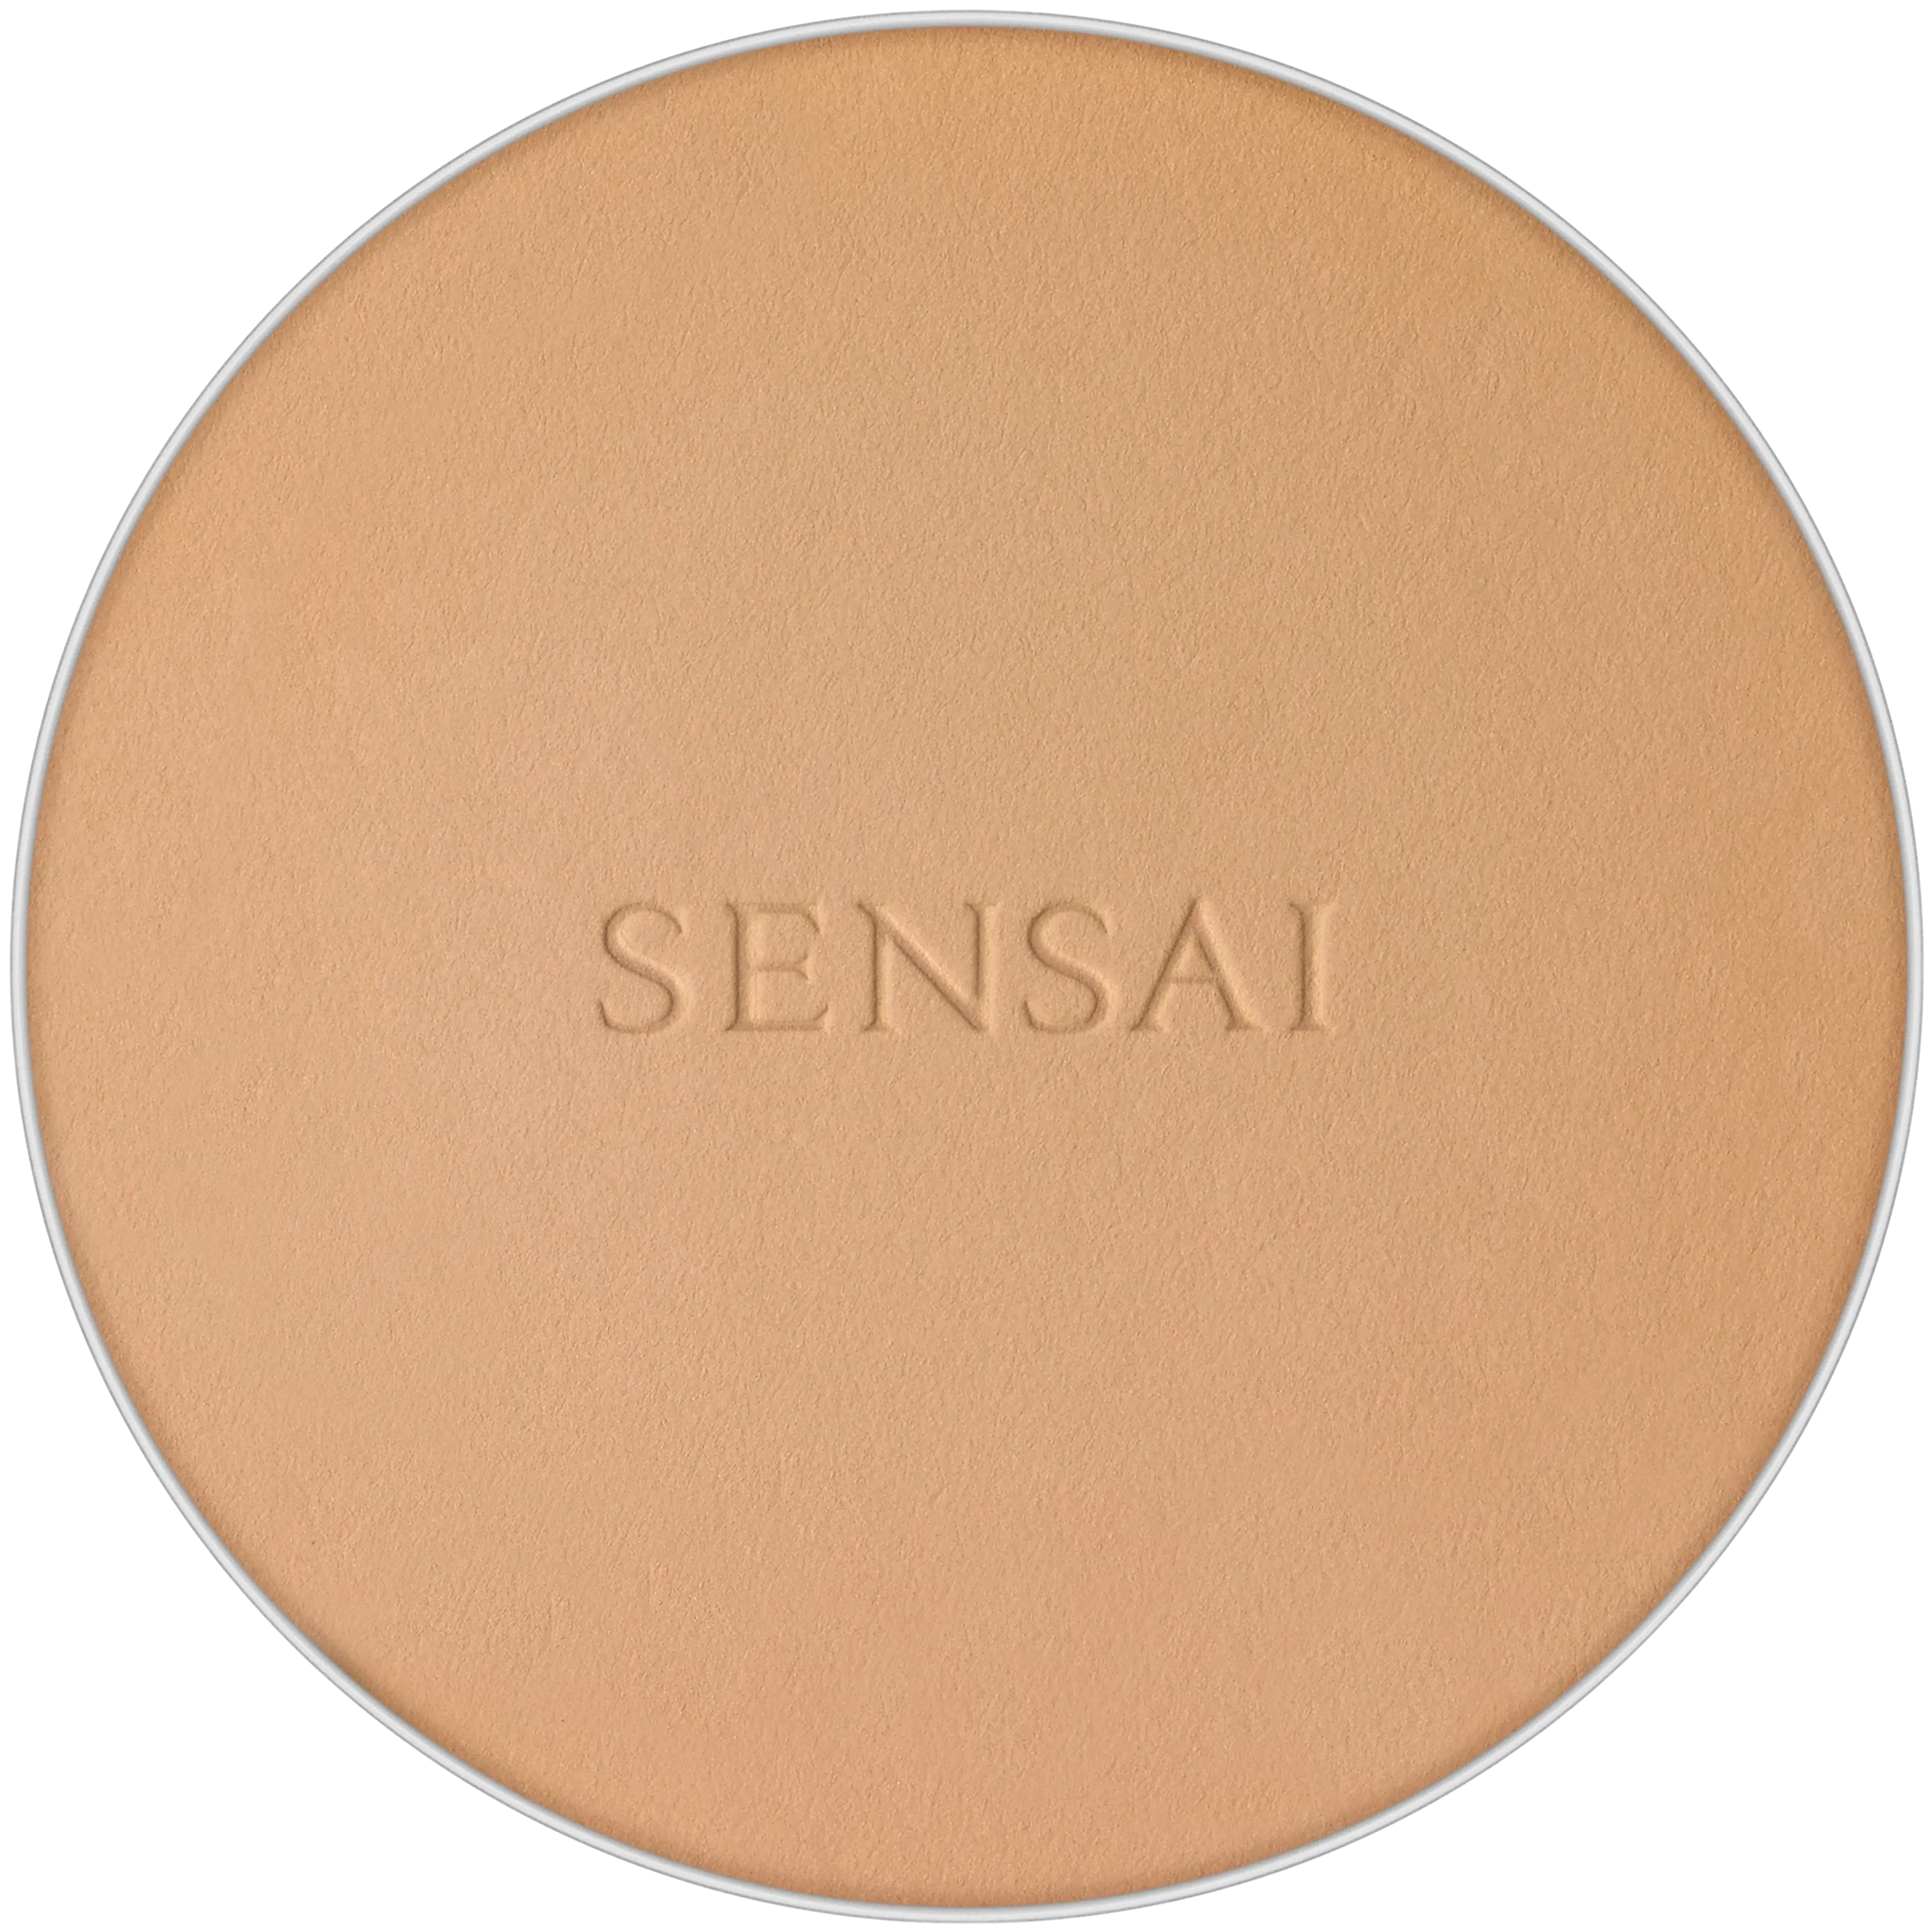 SENSAI Total Finish Refill SPF 10 meikkipuuteri 11g